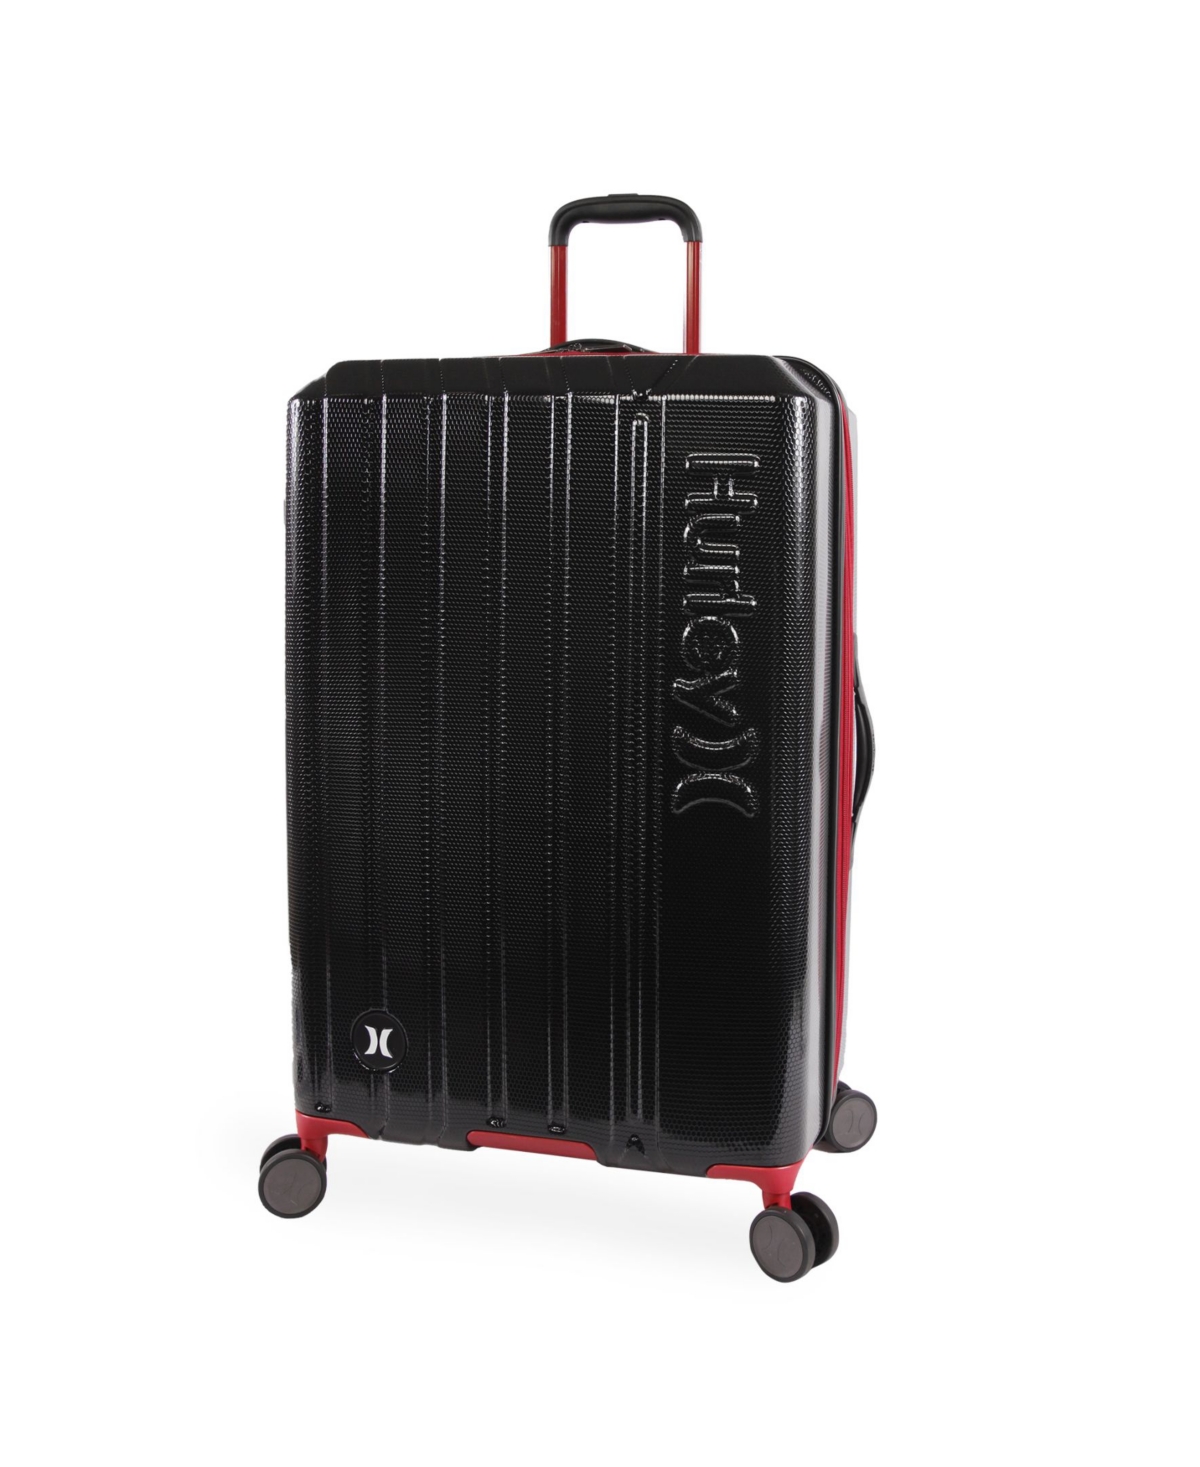 Swiper 29" Hardside Spinner Suitcase - Black/Red